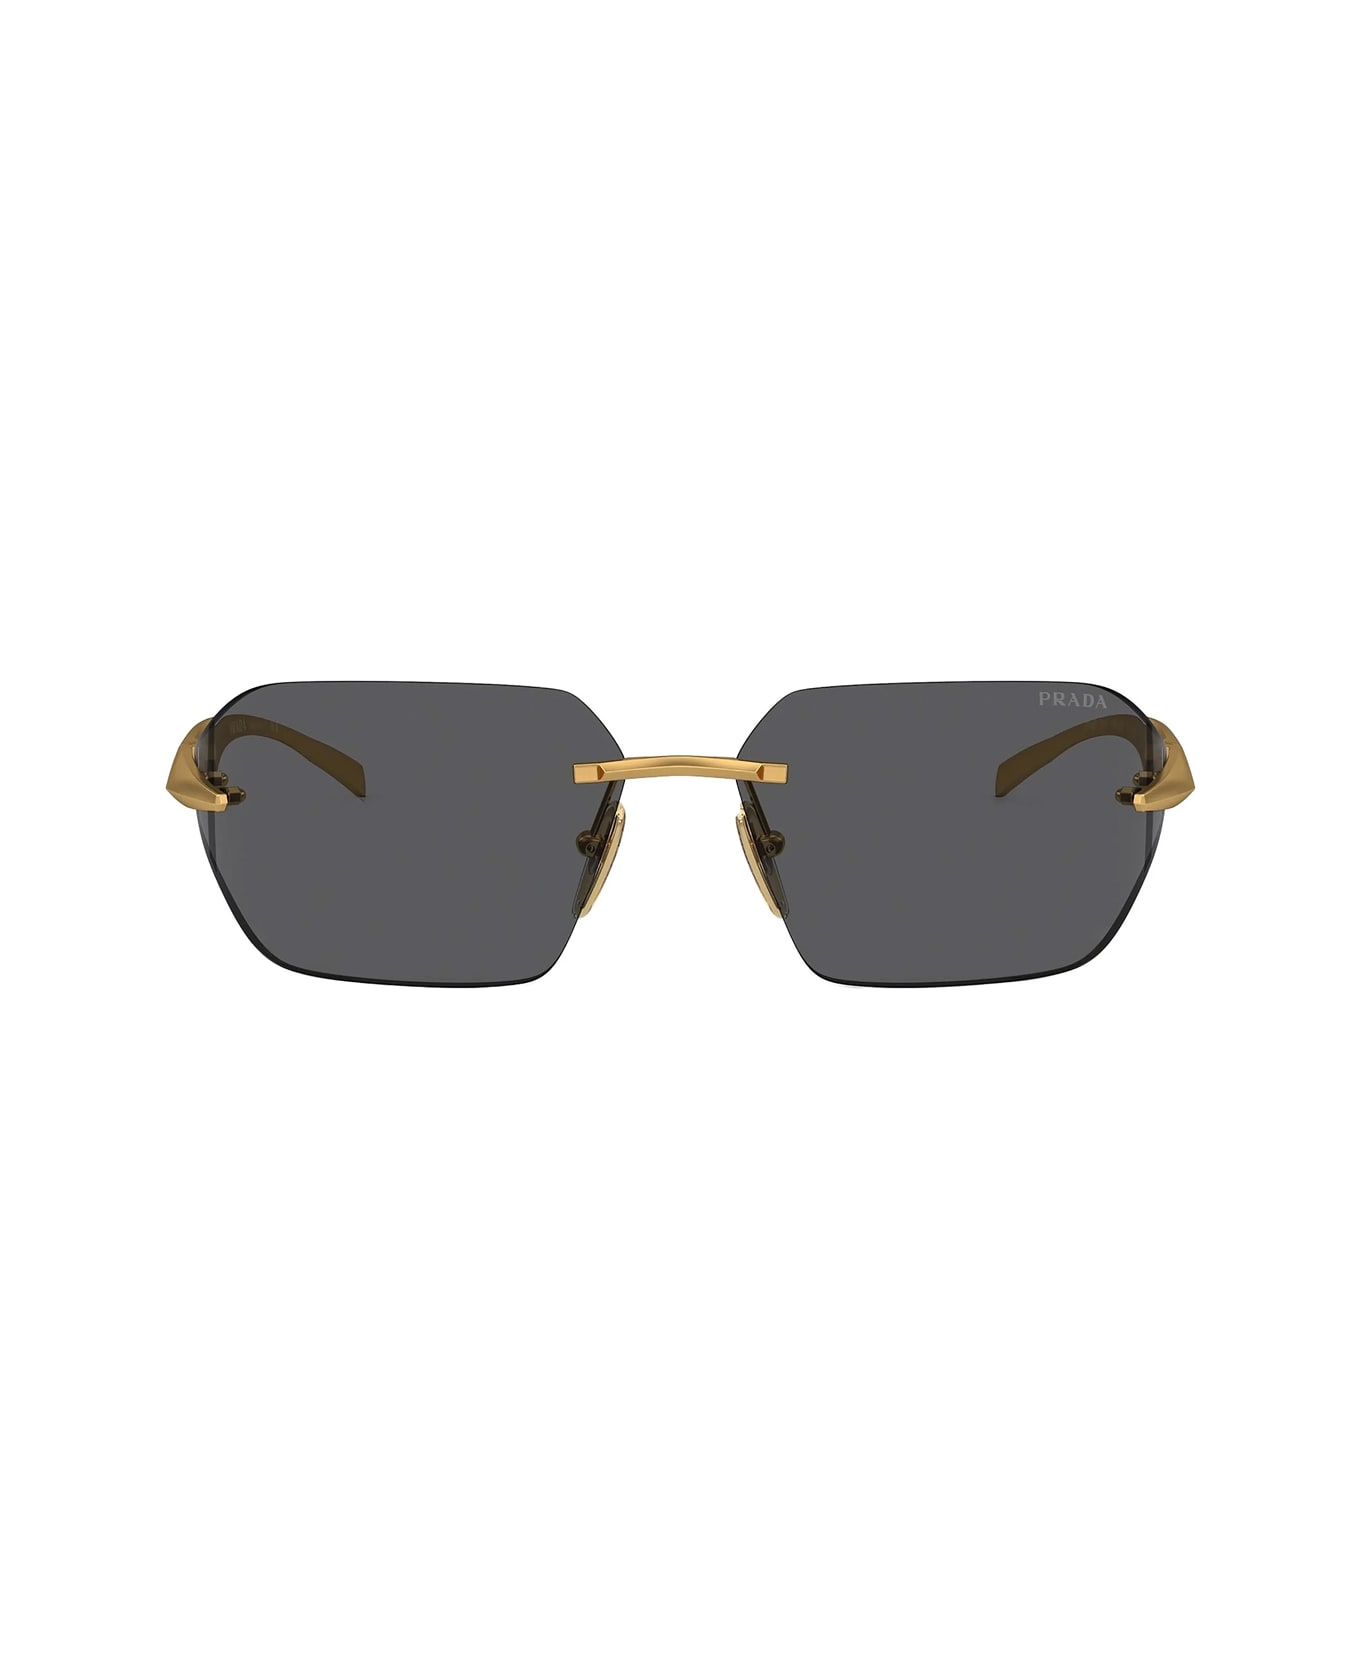 Prada Eyewear Pra56s 15n5s0 Sunglasses - Oro